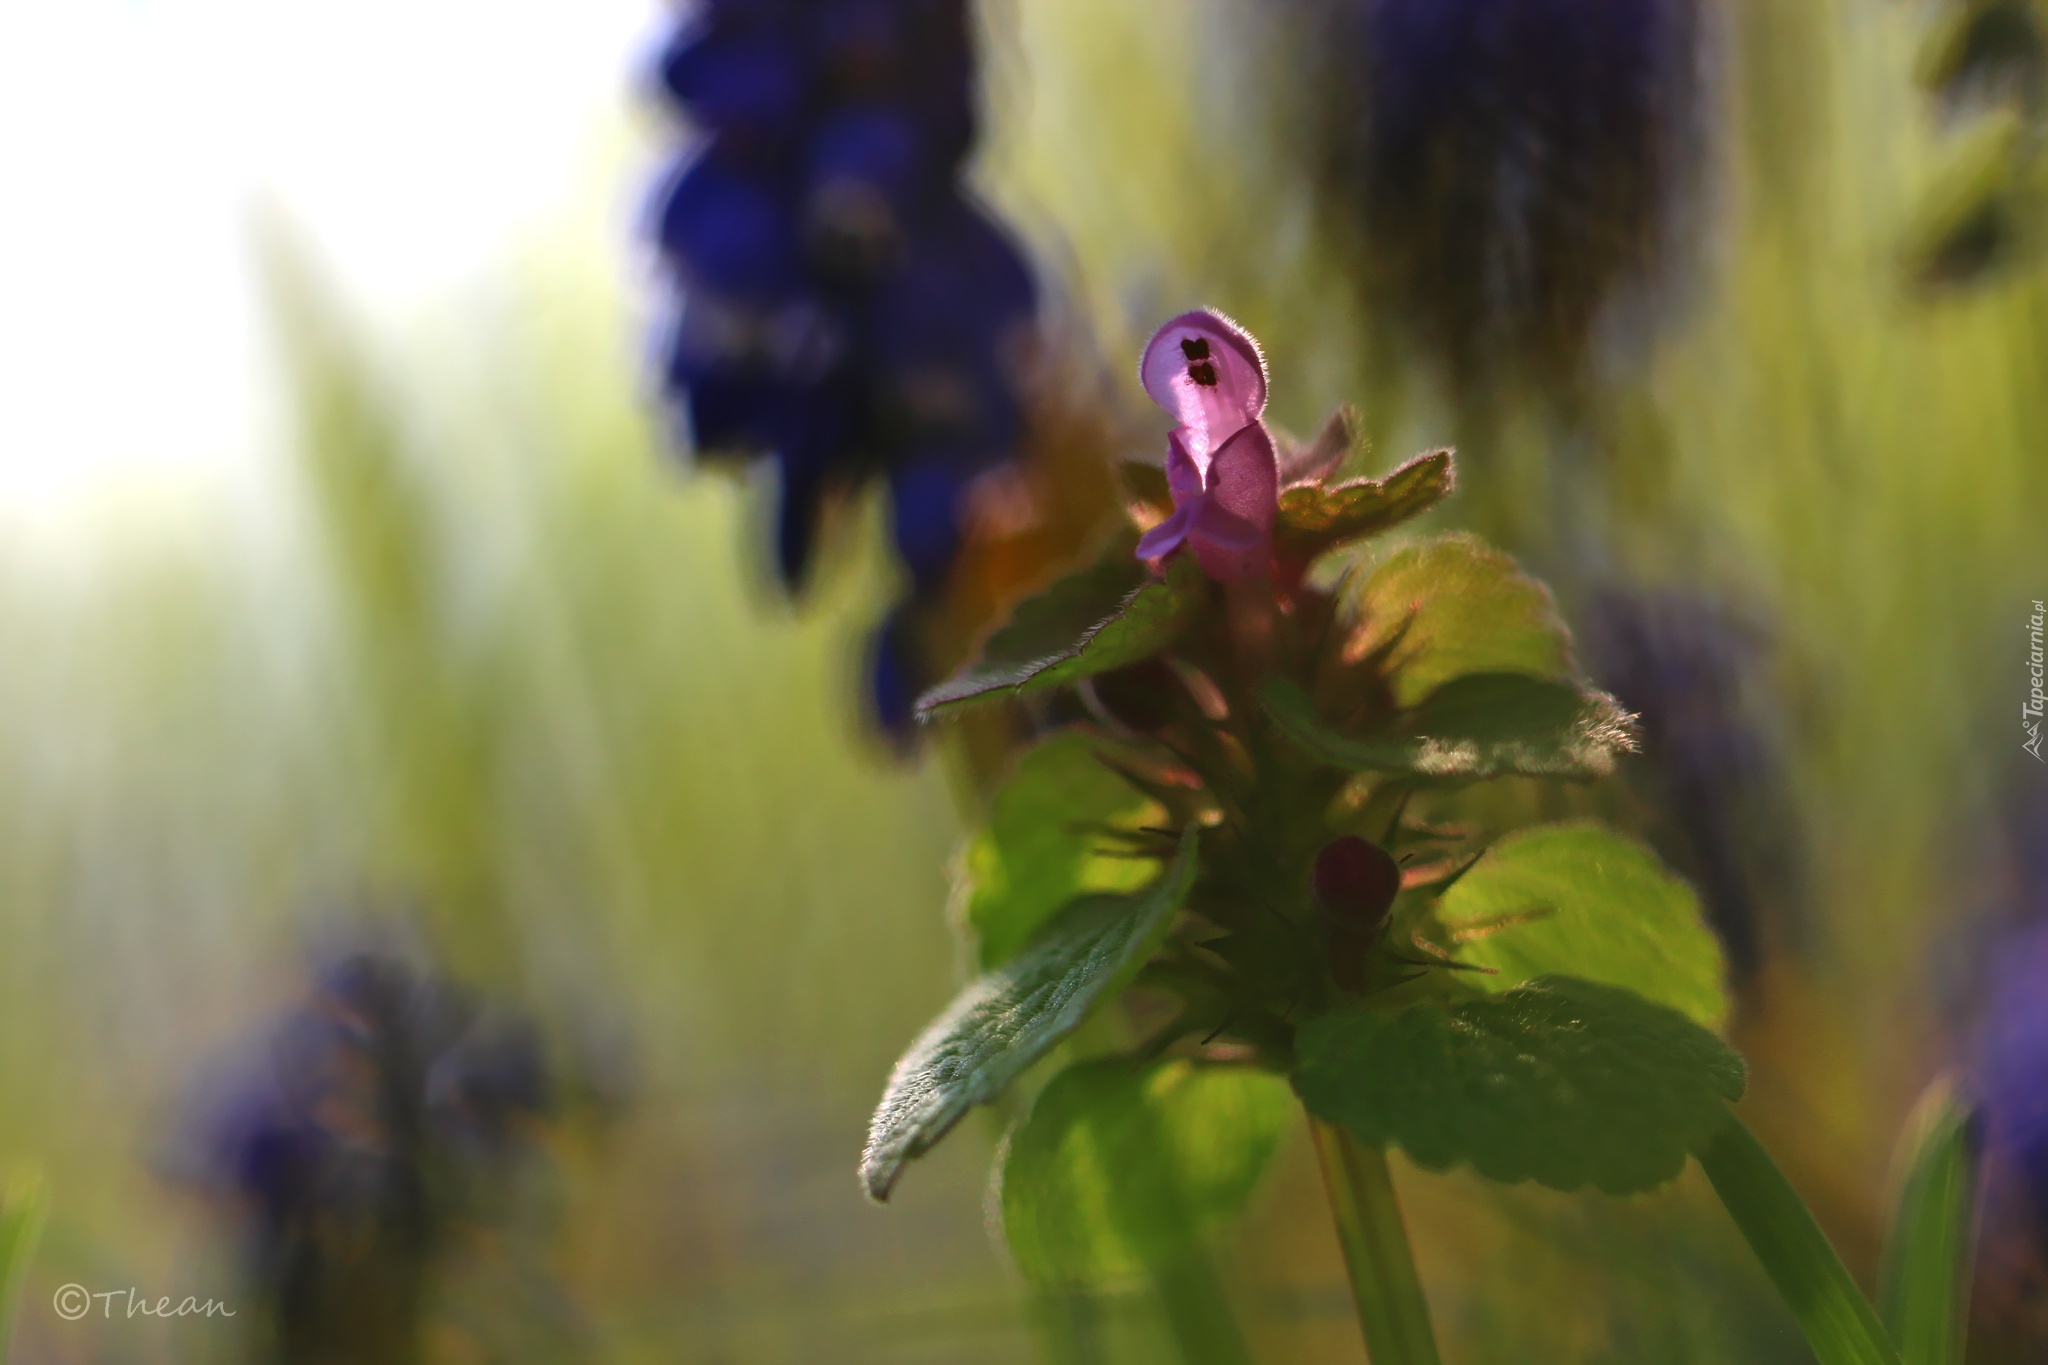 Jasnota Purpurowa, Fioletowy, Kwiat